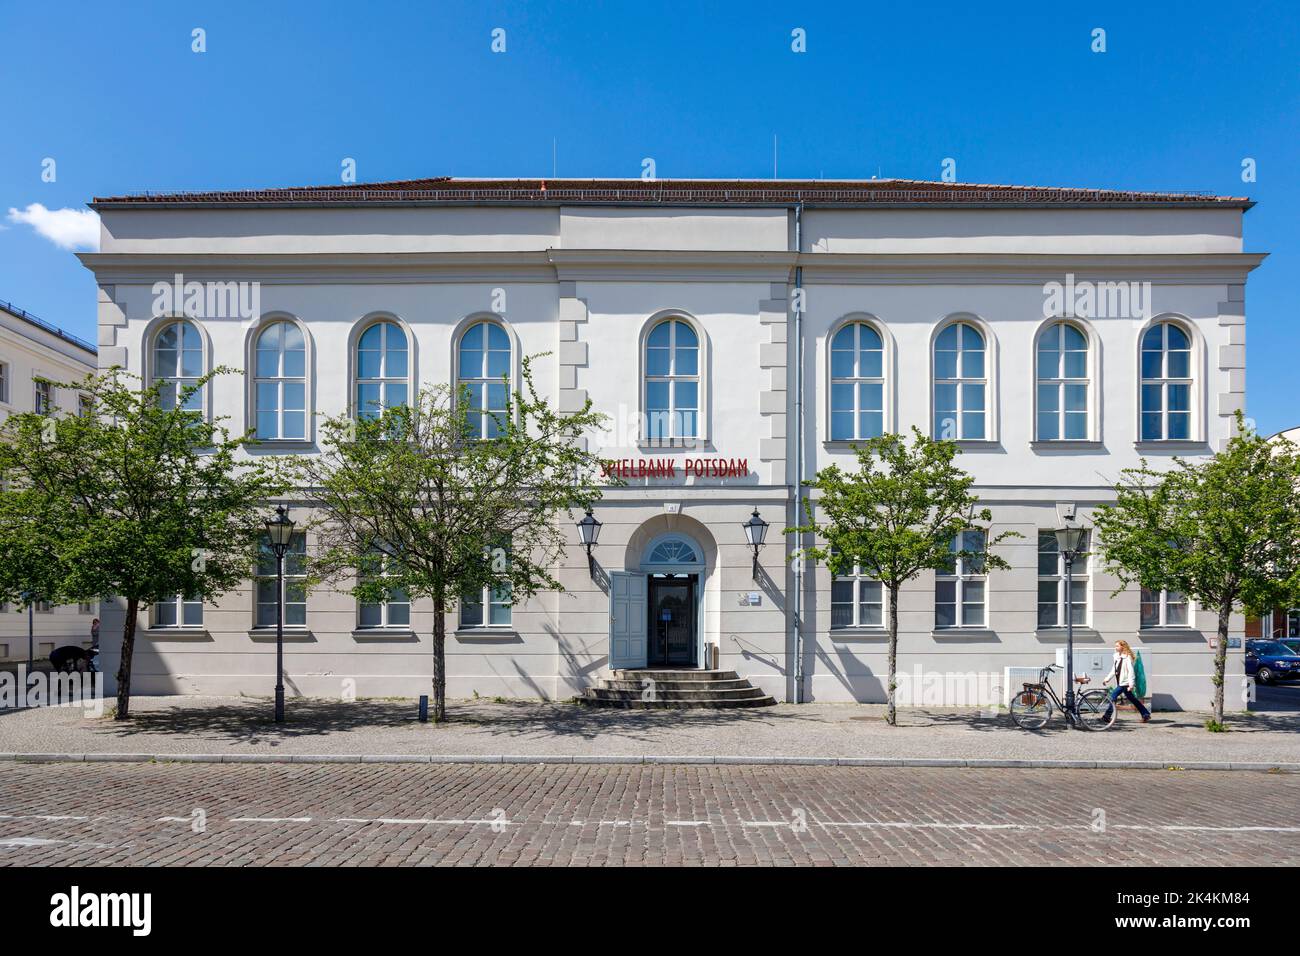 Spielbank Potsdam Stock Photo